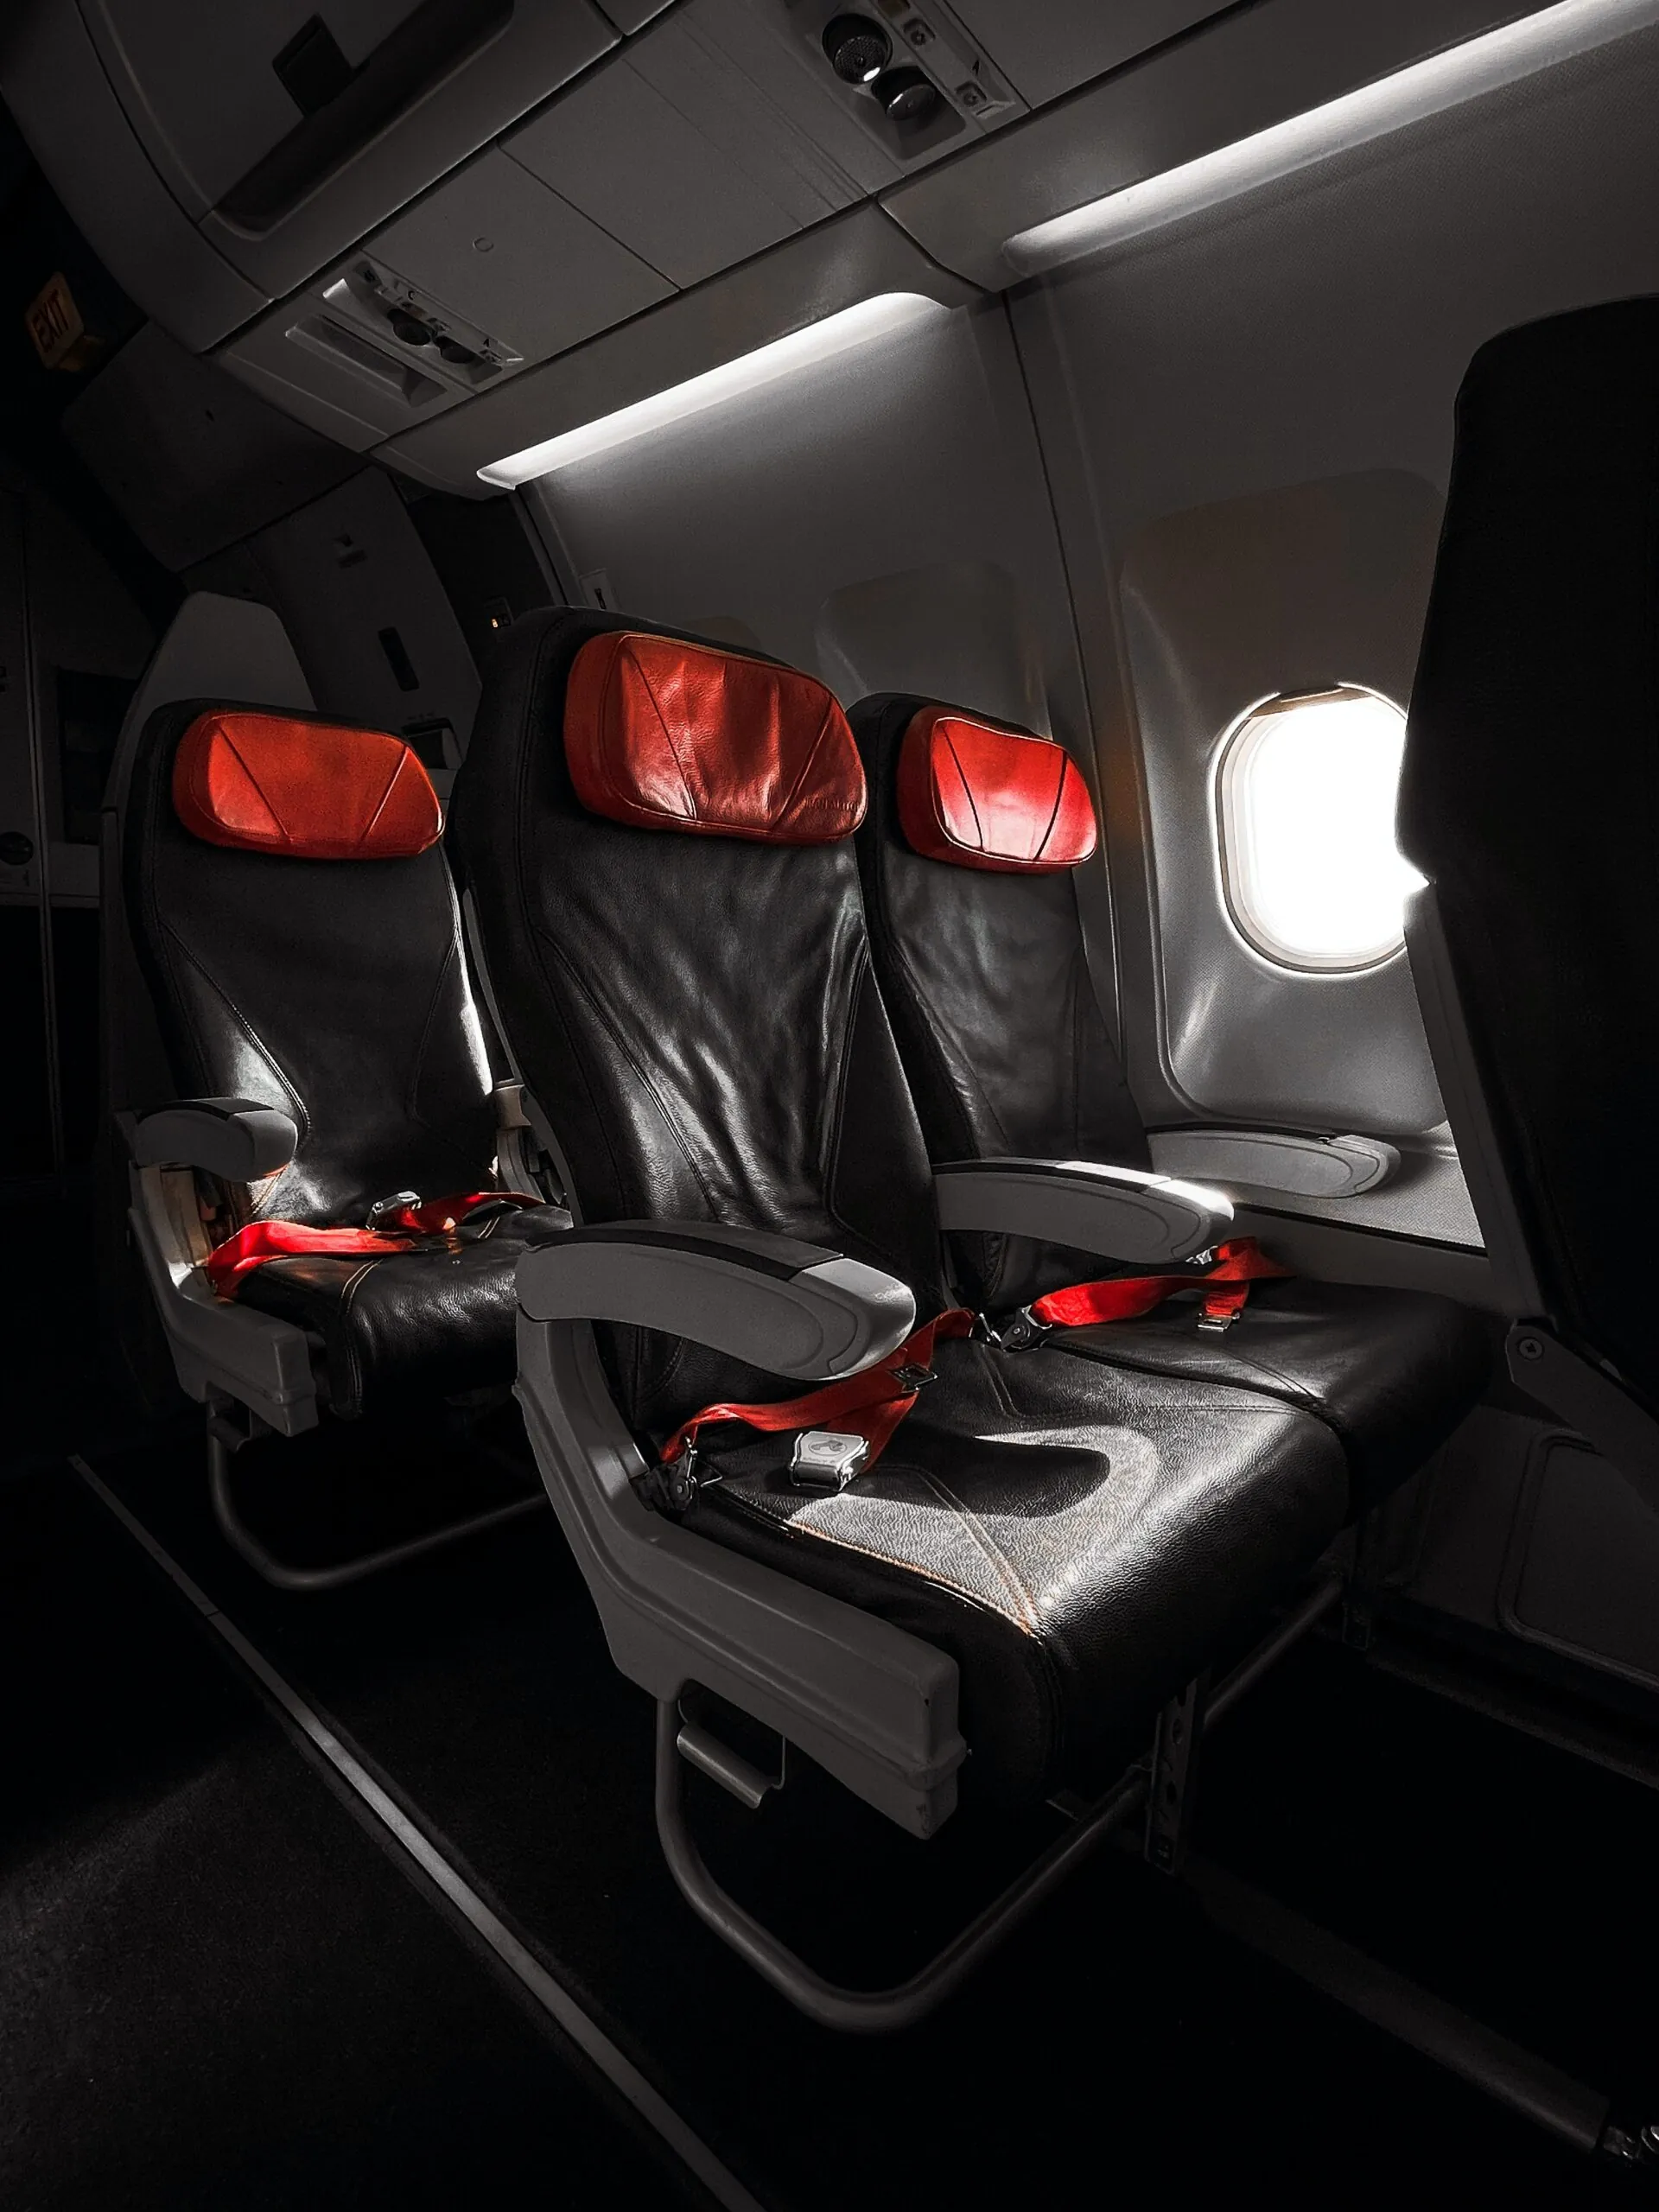 row of airplane seats factors